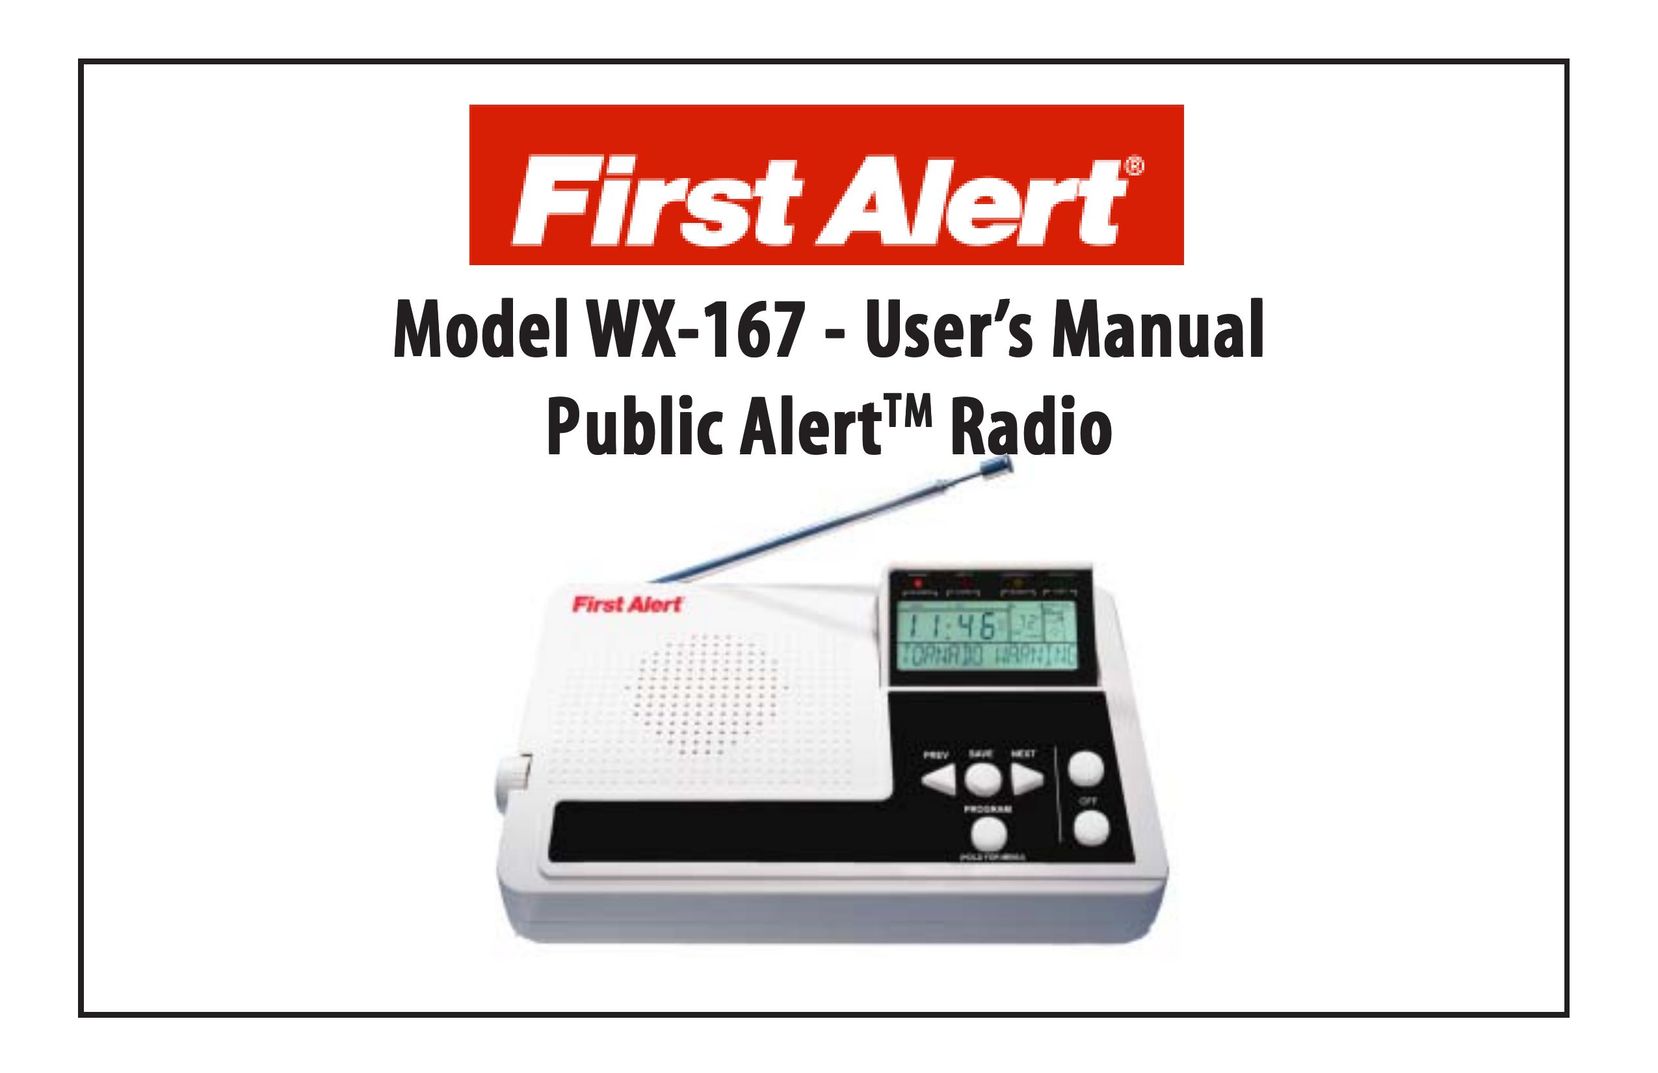 First Alert WX-167 Portable Radio User Manual